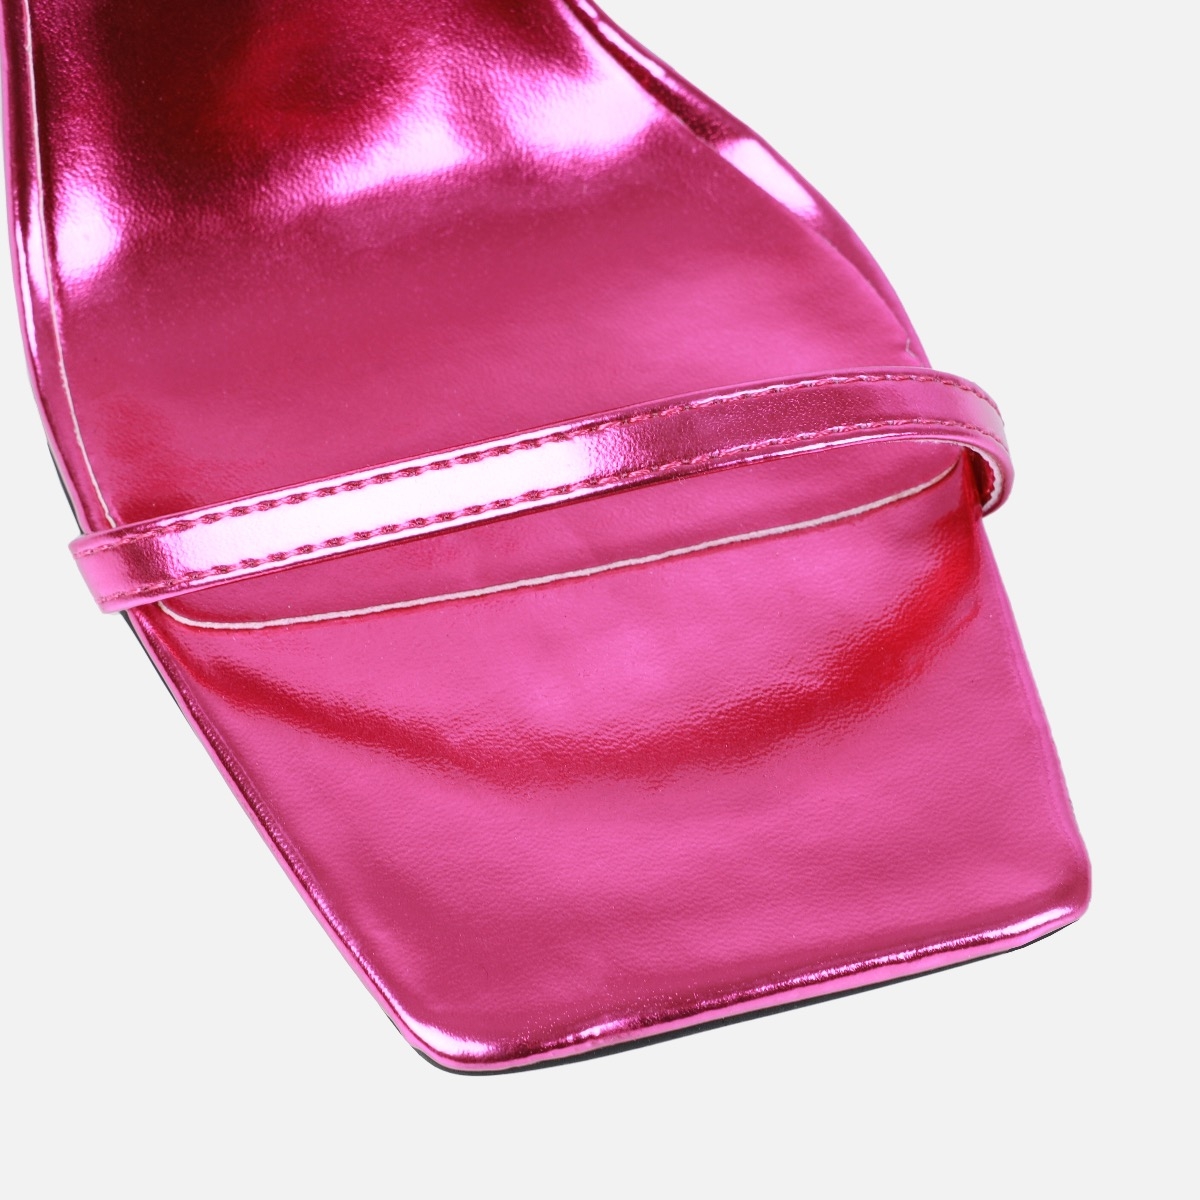 Marco Tozzi Classic heels - pink metallic/pink - Zalando.de